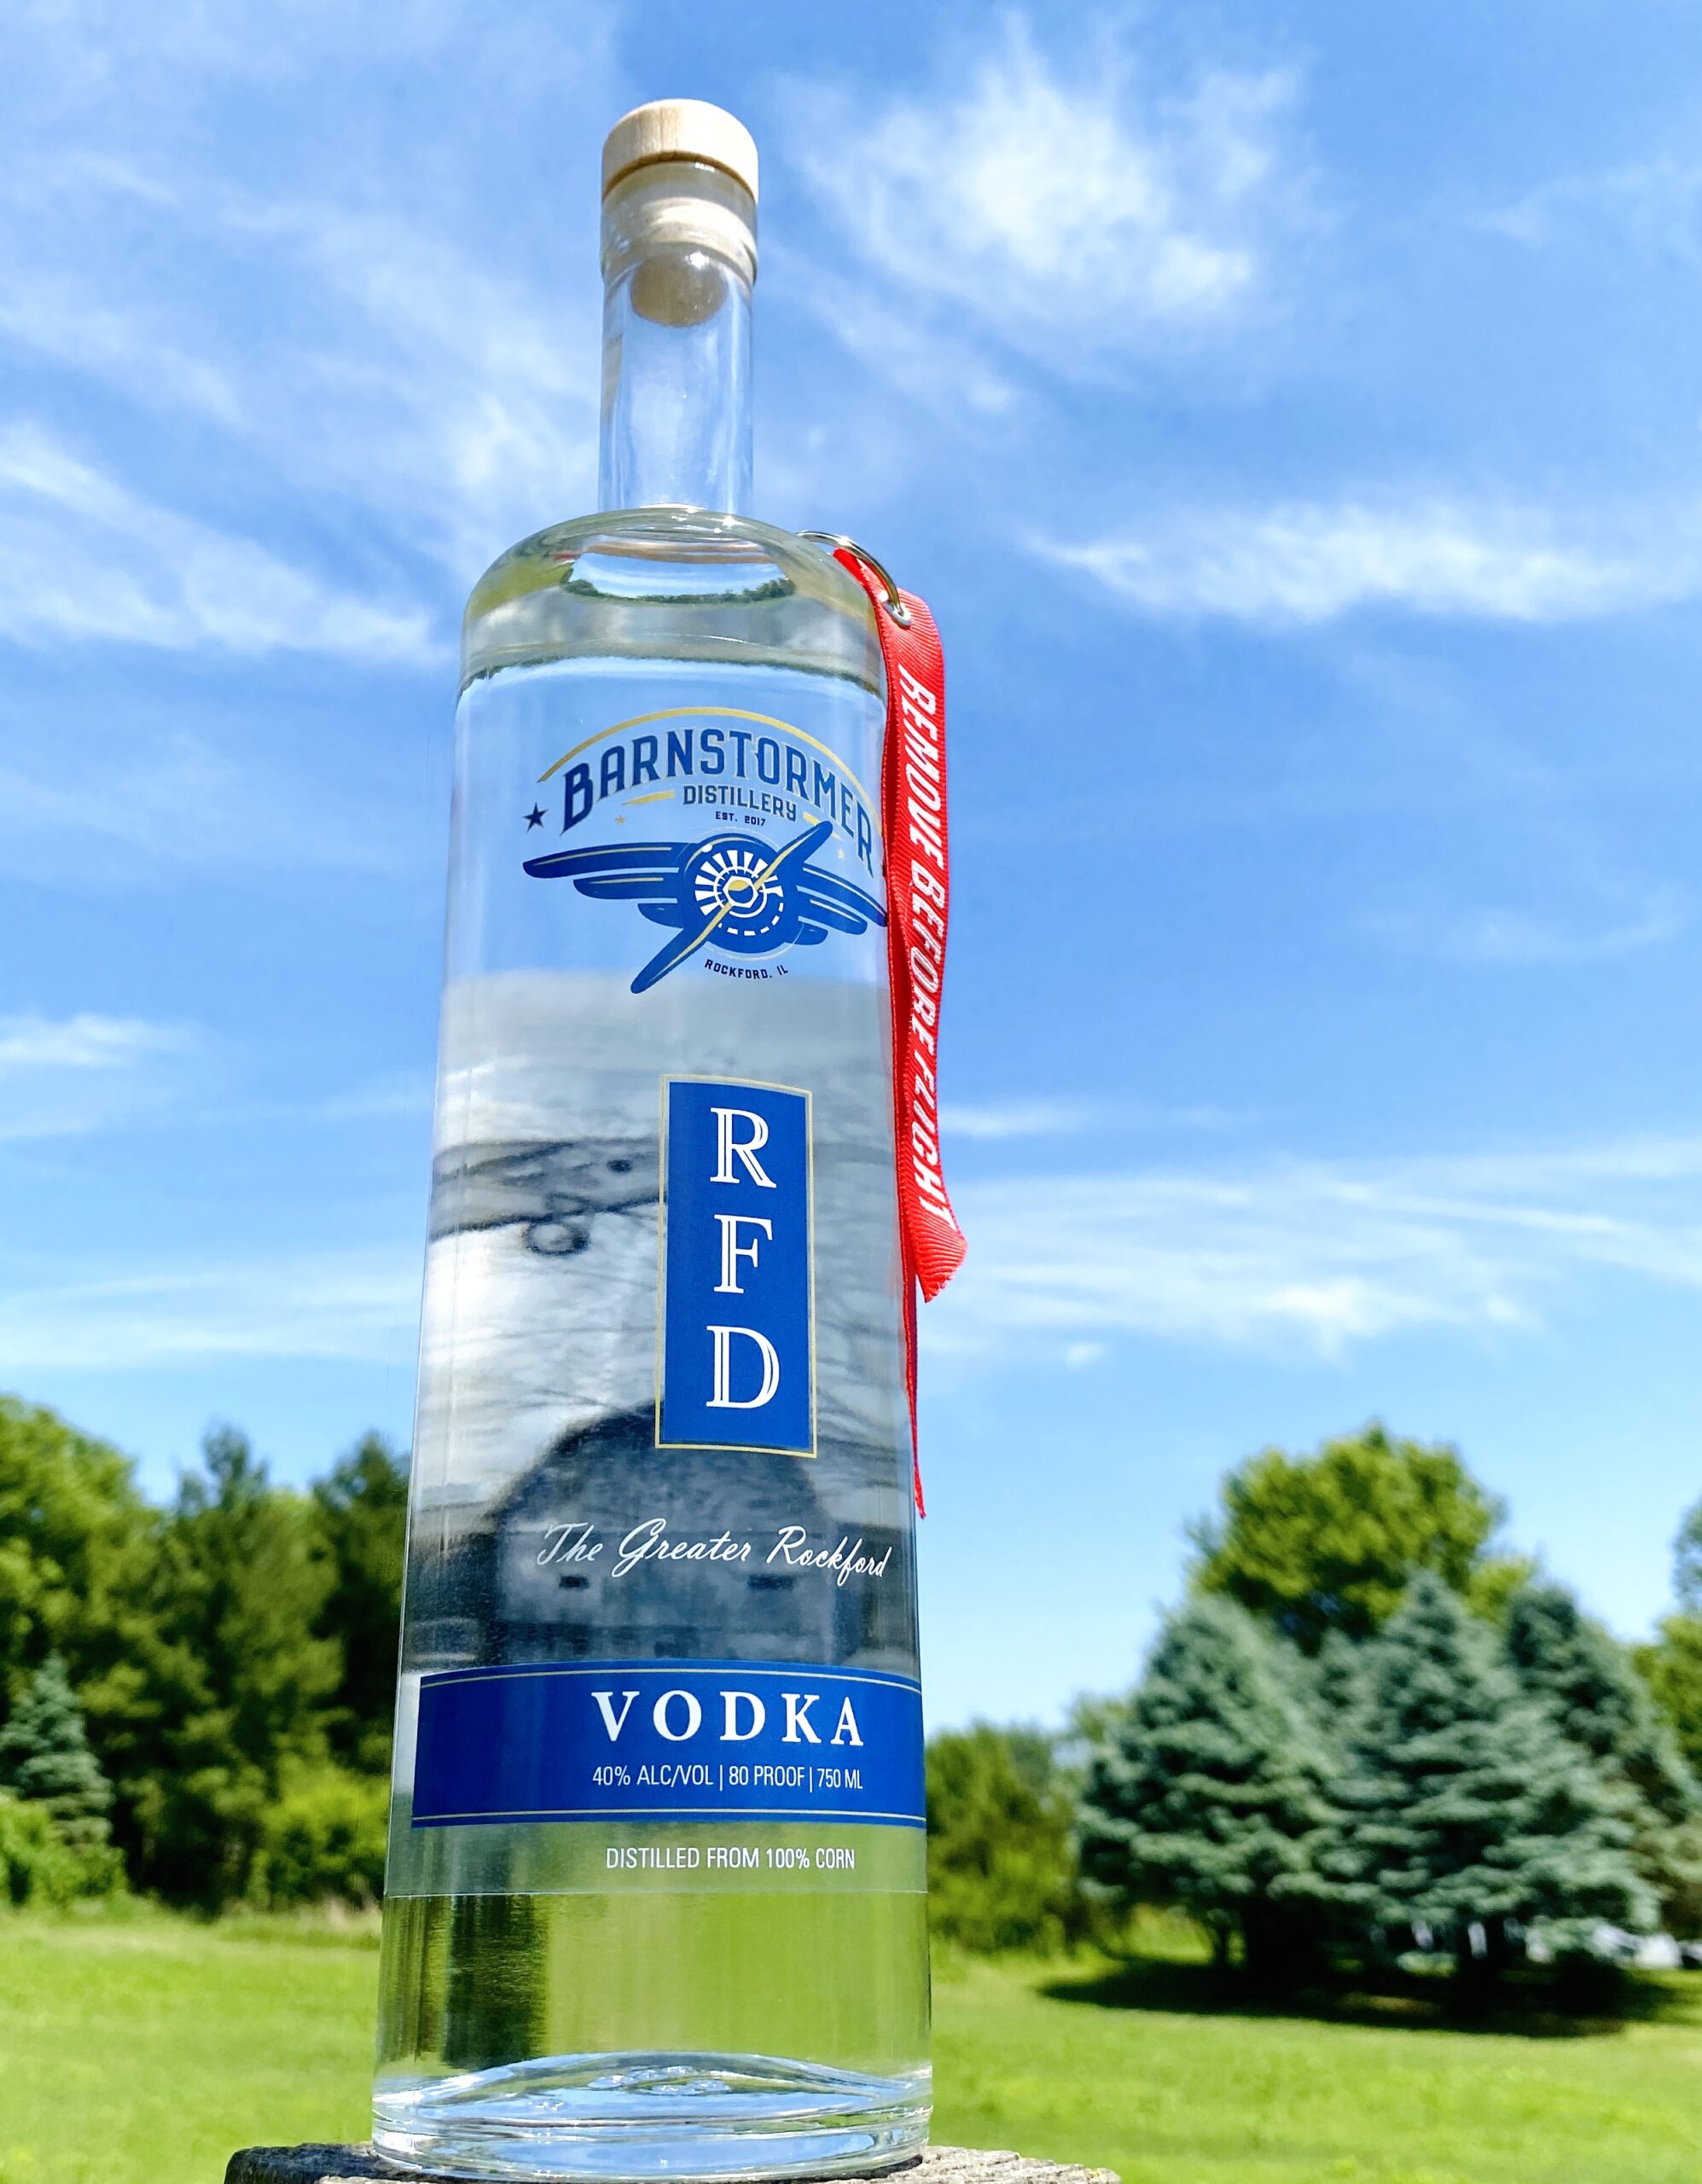 Barnstormer's RFD Vodka